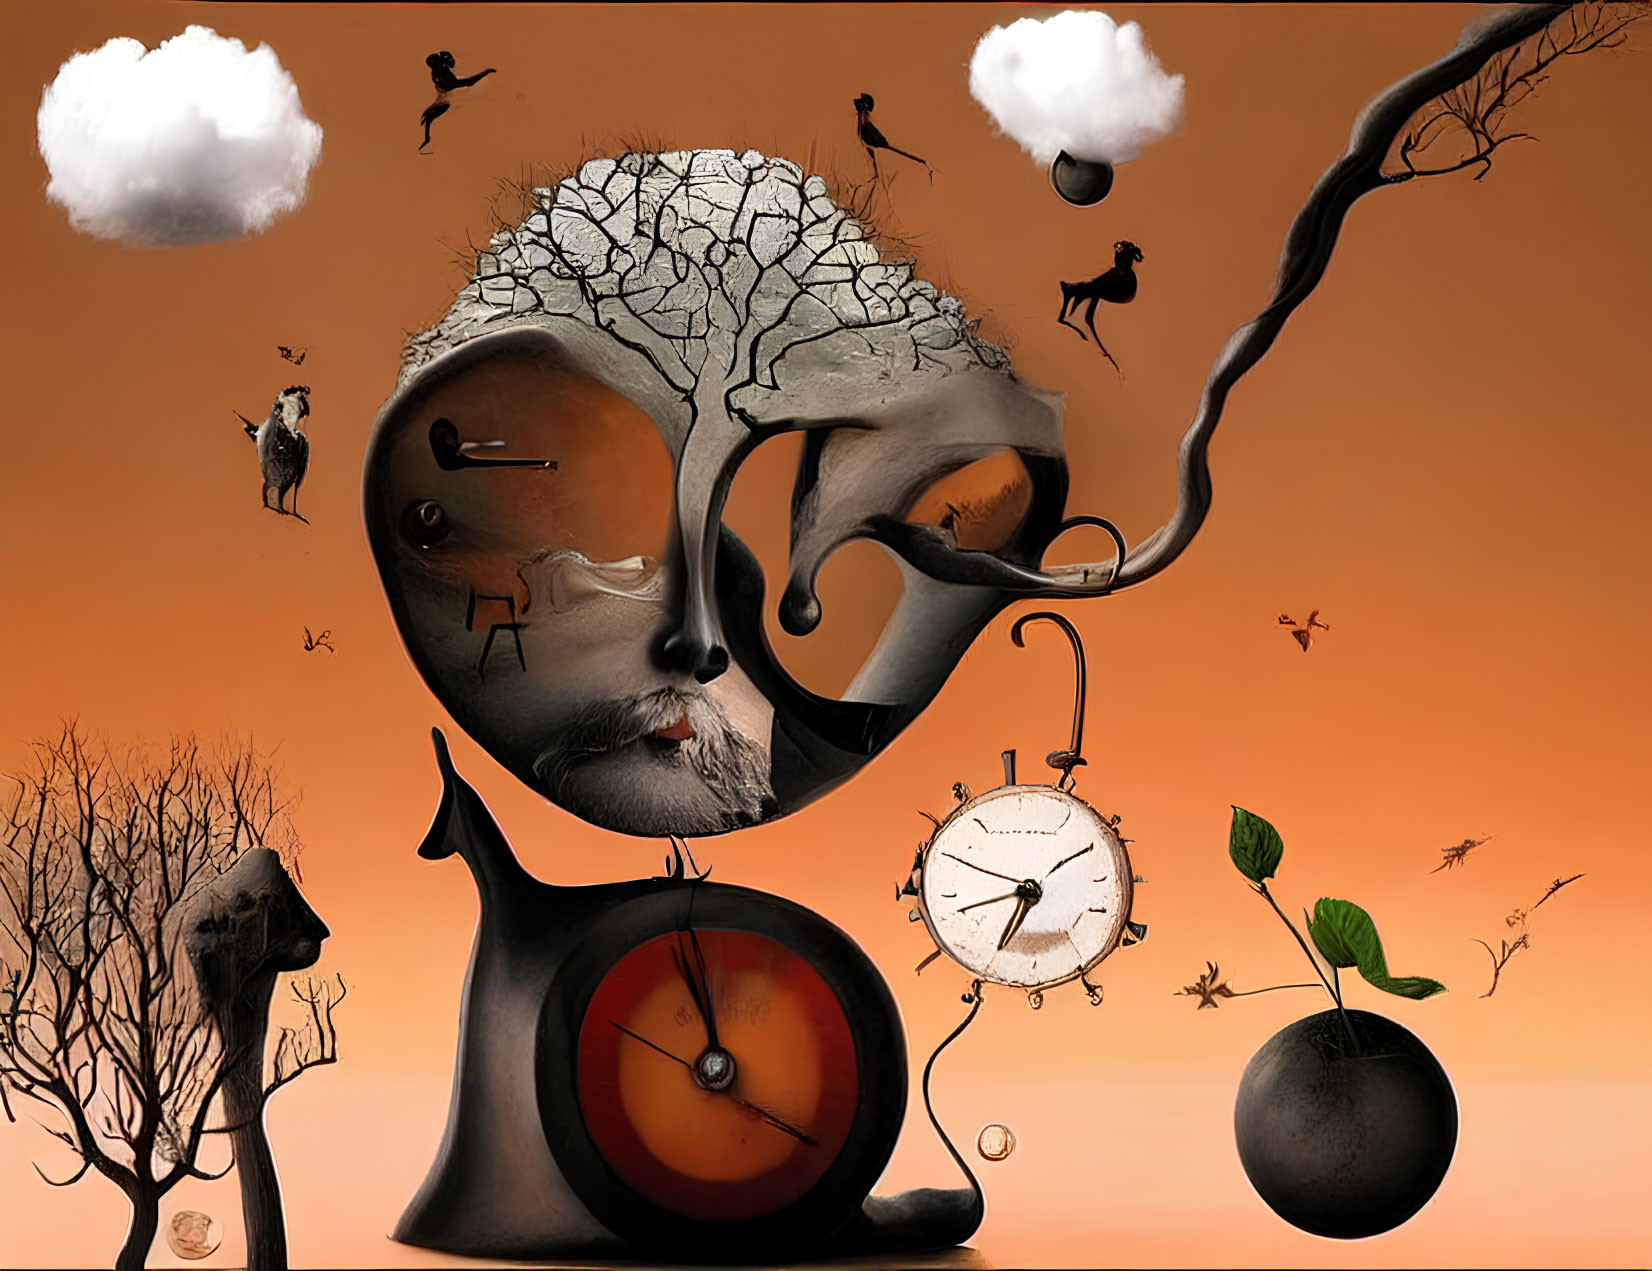 Surreal artwork with melting clock, blending face, black cat, and floating islands